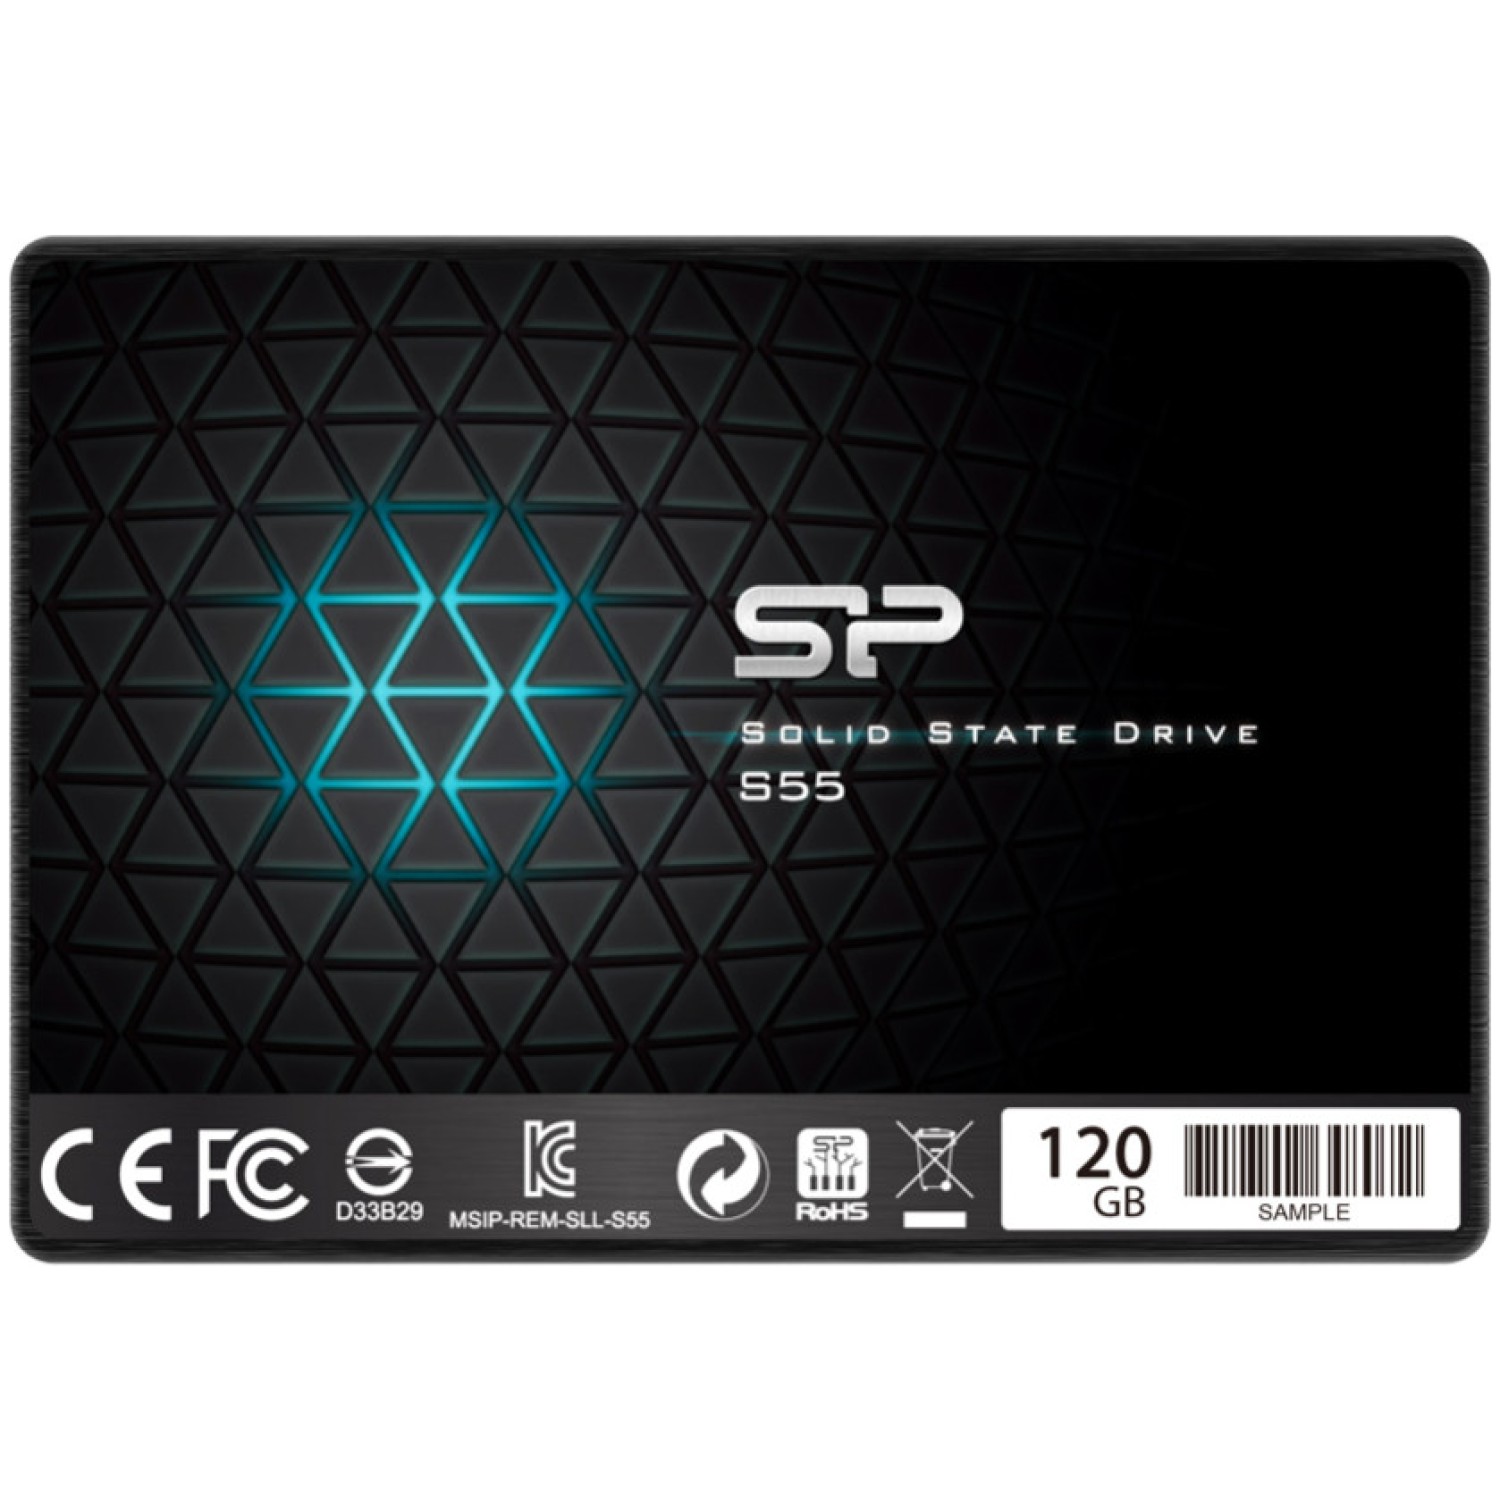 5") 120GB SATA3 Silicon Power SSD S55 556/420 MB/s NCQ ECC